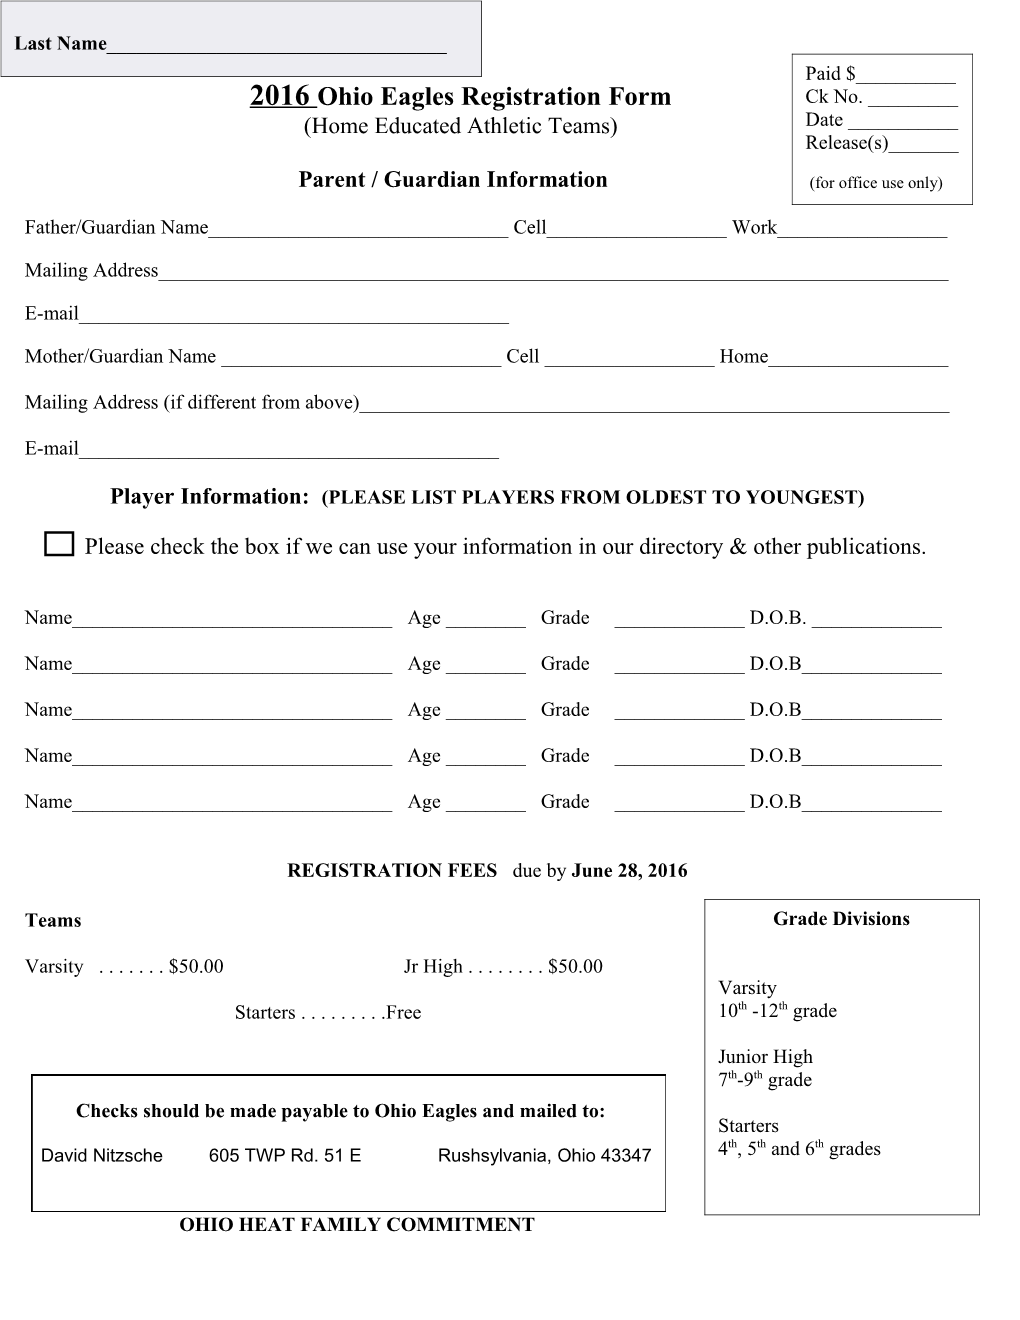 2016 Ohio Eagles Registration Form